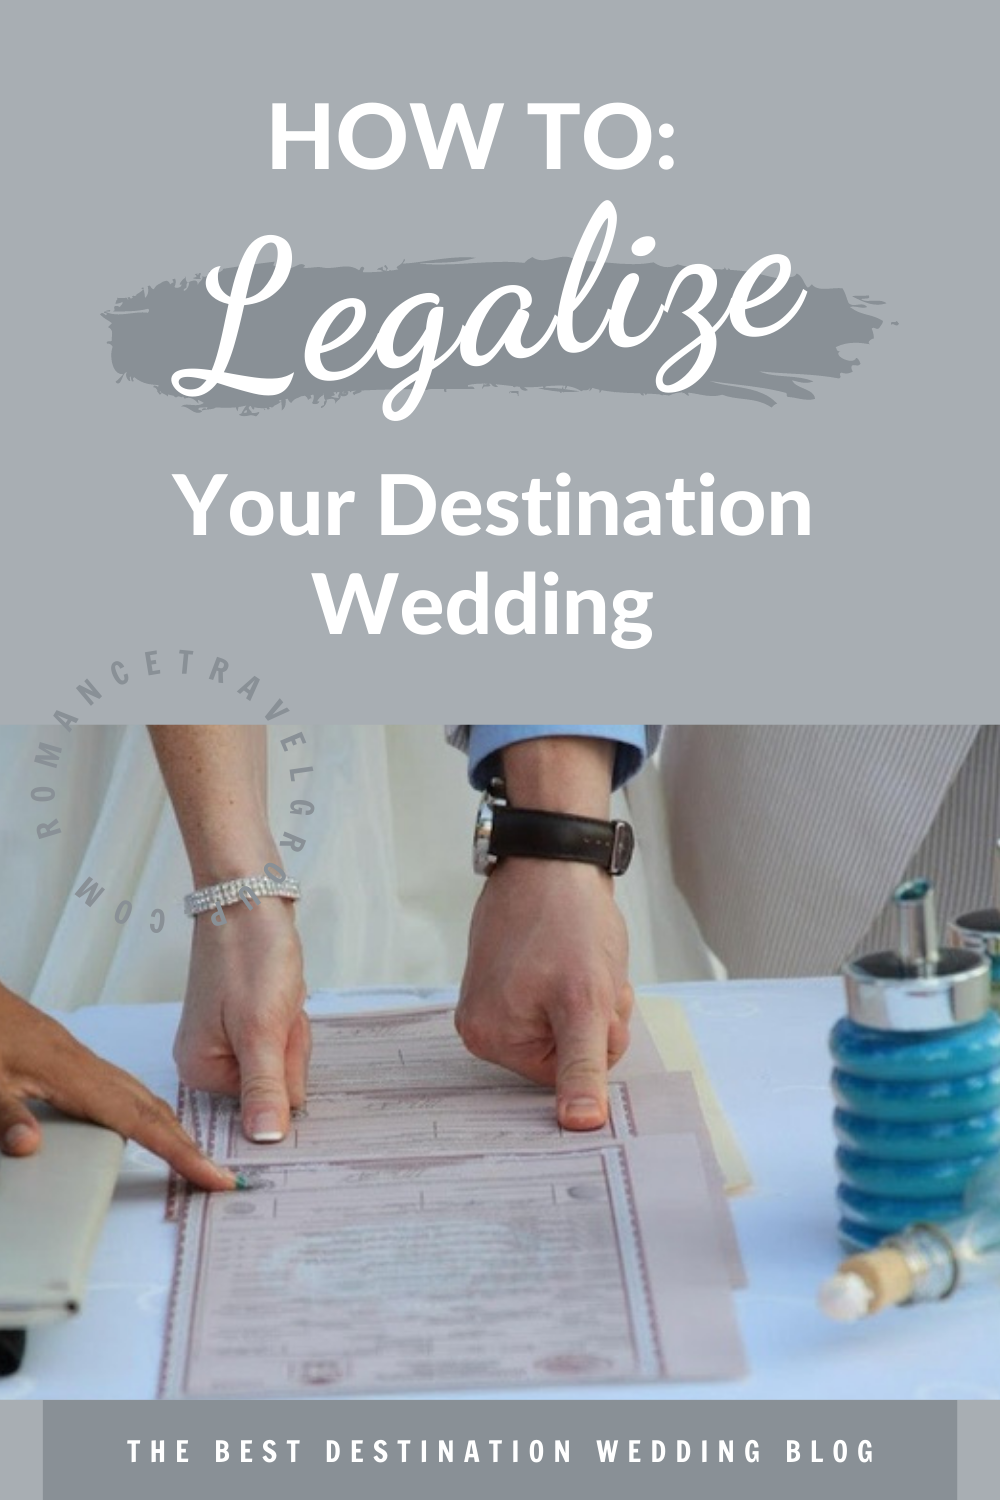 How to Legalize Your Destination Wedding